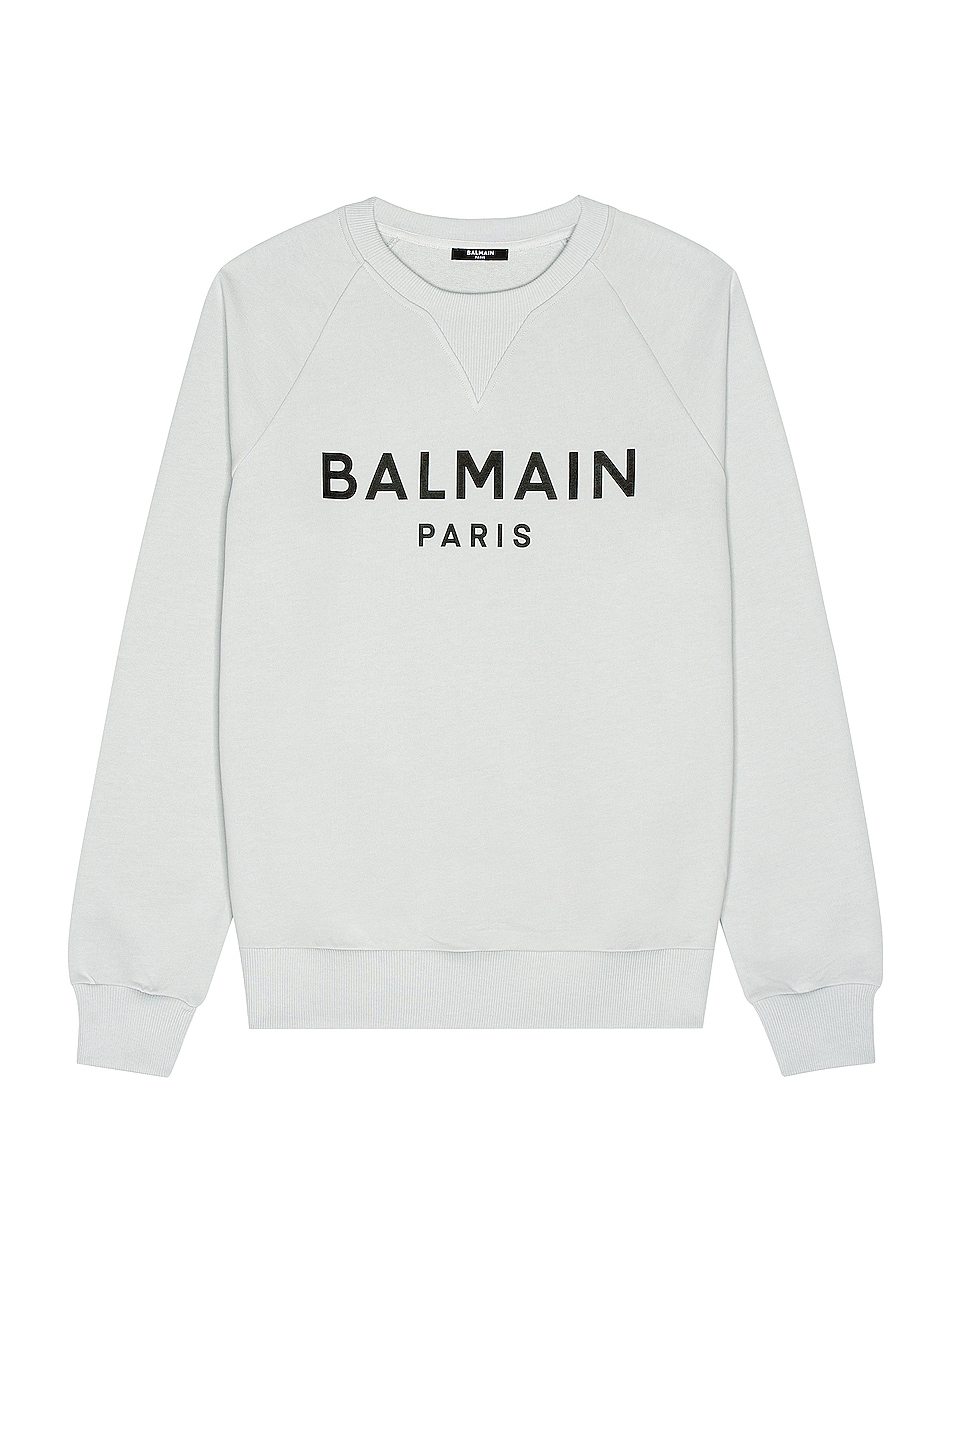 Image 1 of BALMAIN Balmain Printed Sweatshirt in YDV GRIS CLAIR/NOIR